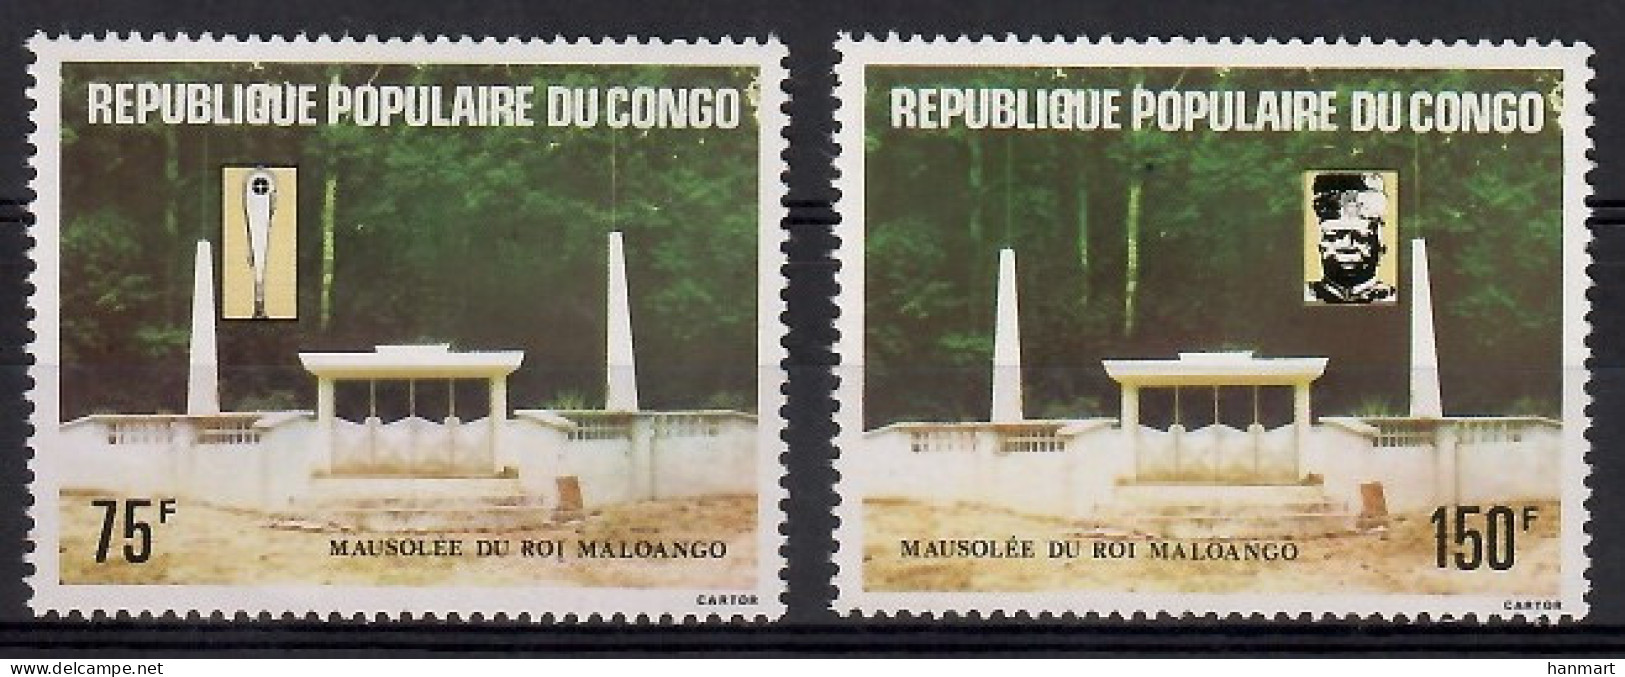 Congo, Republic (Brazzaville) 1981 Mi 825-826 MNH  (ZS6 CNG825-826) - Beeldhouwkunst